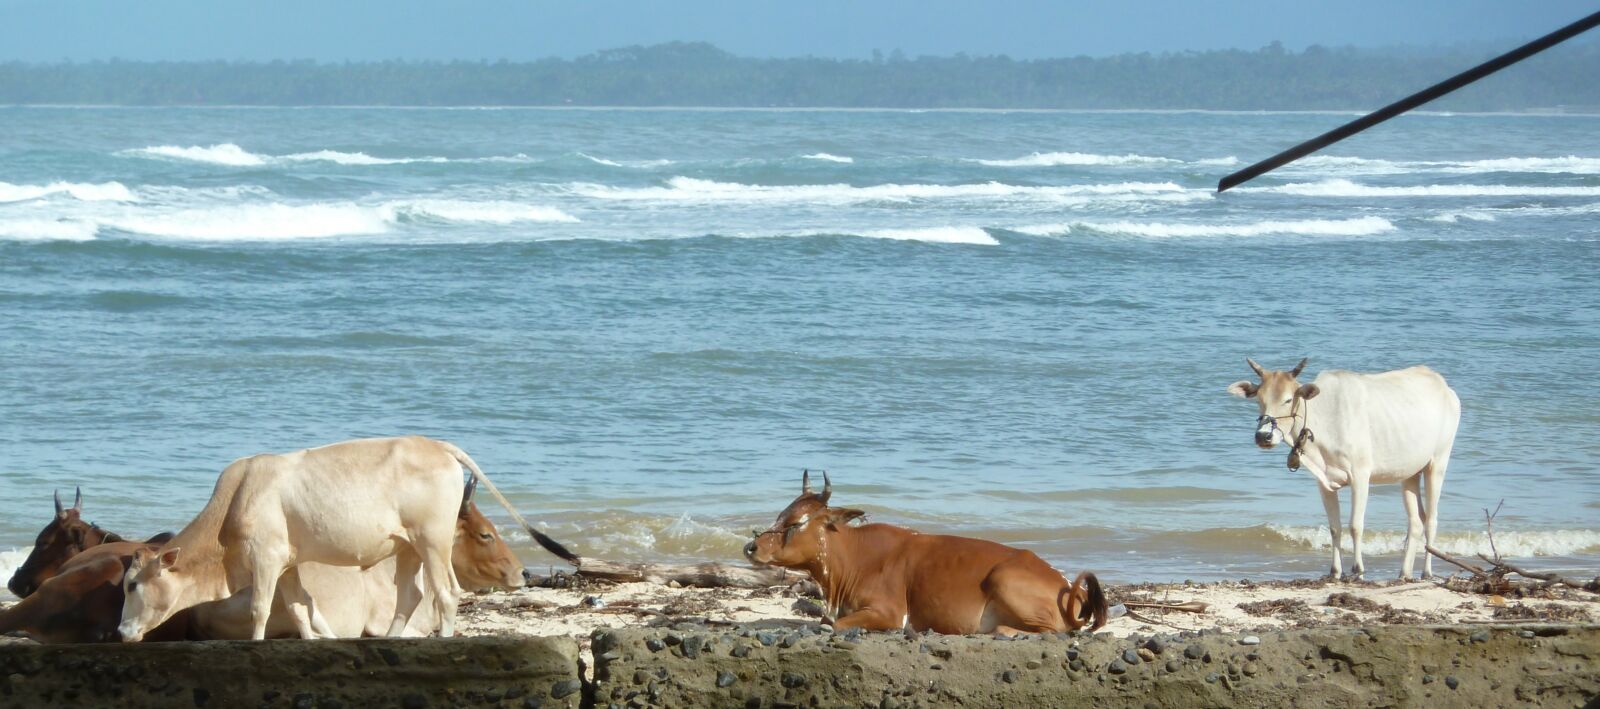 Cows on beach